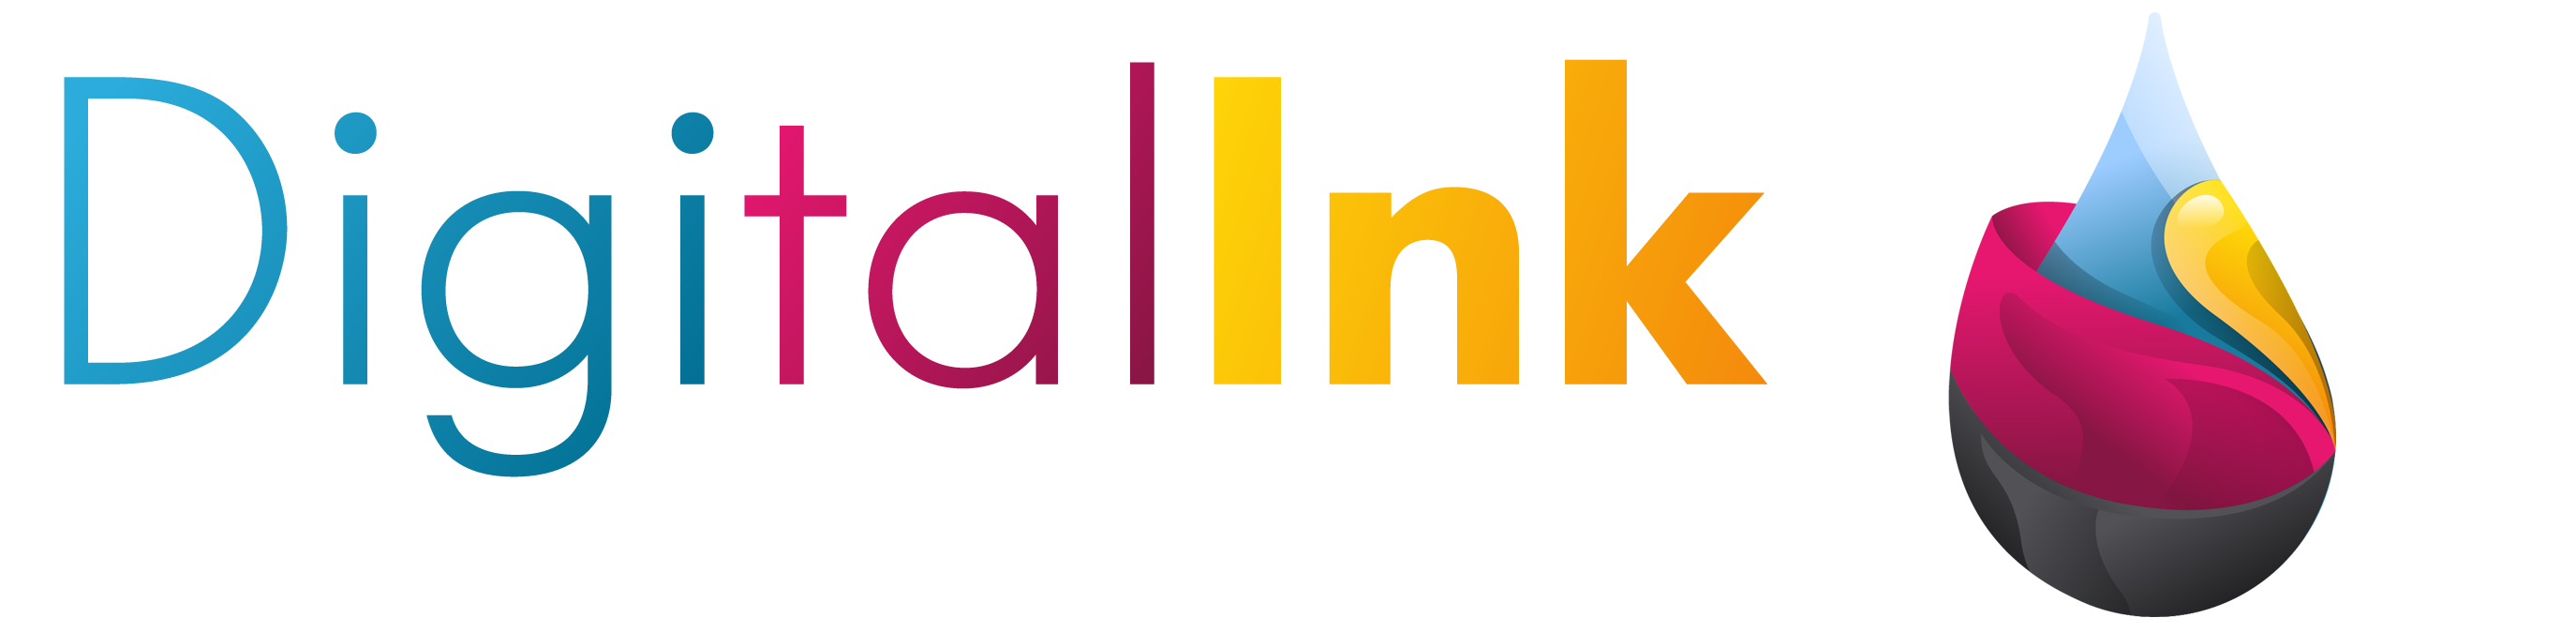 Digital Ink Technology